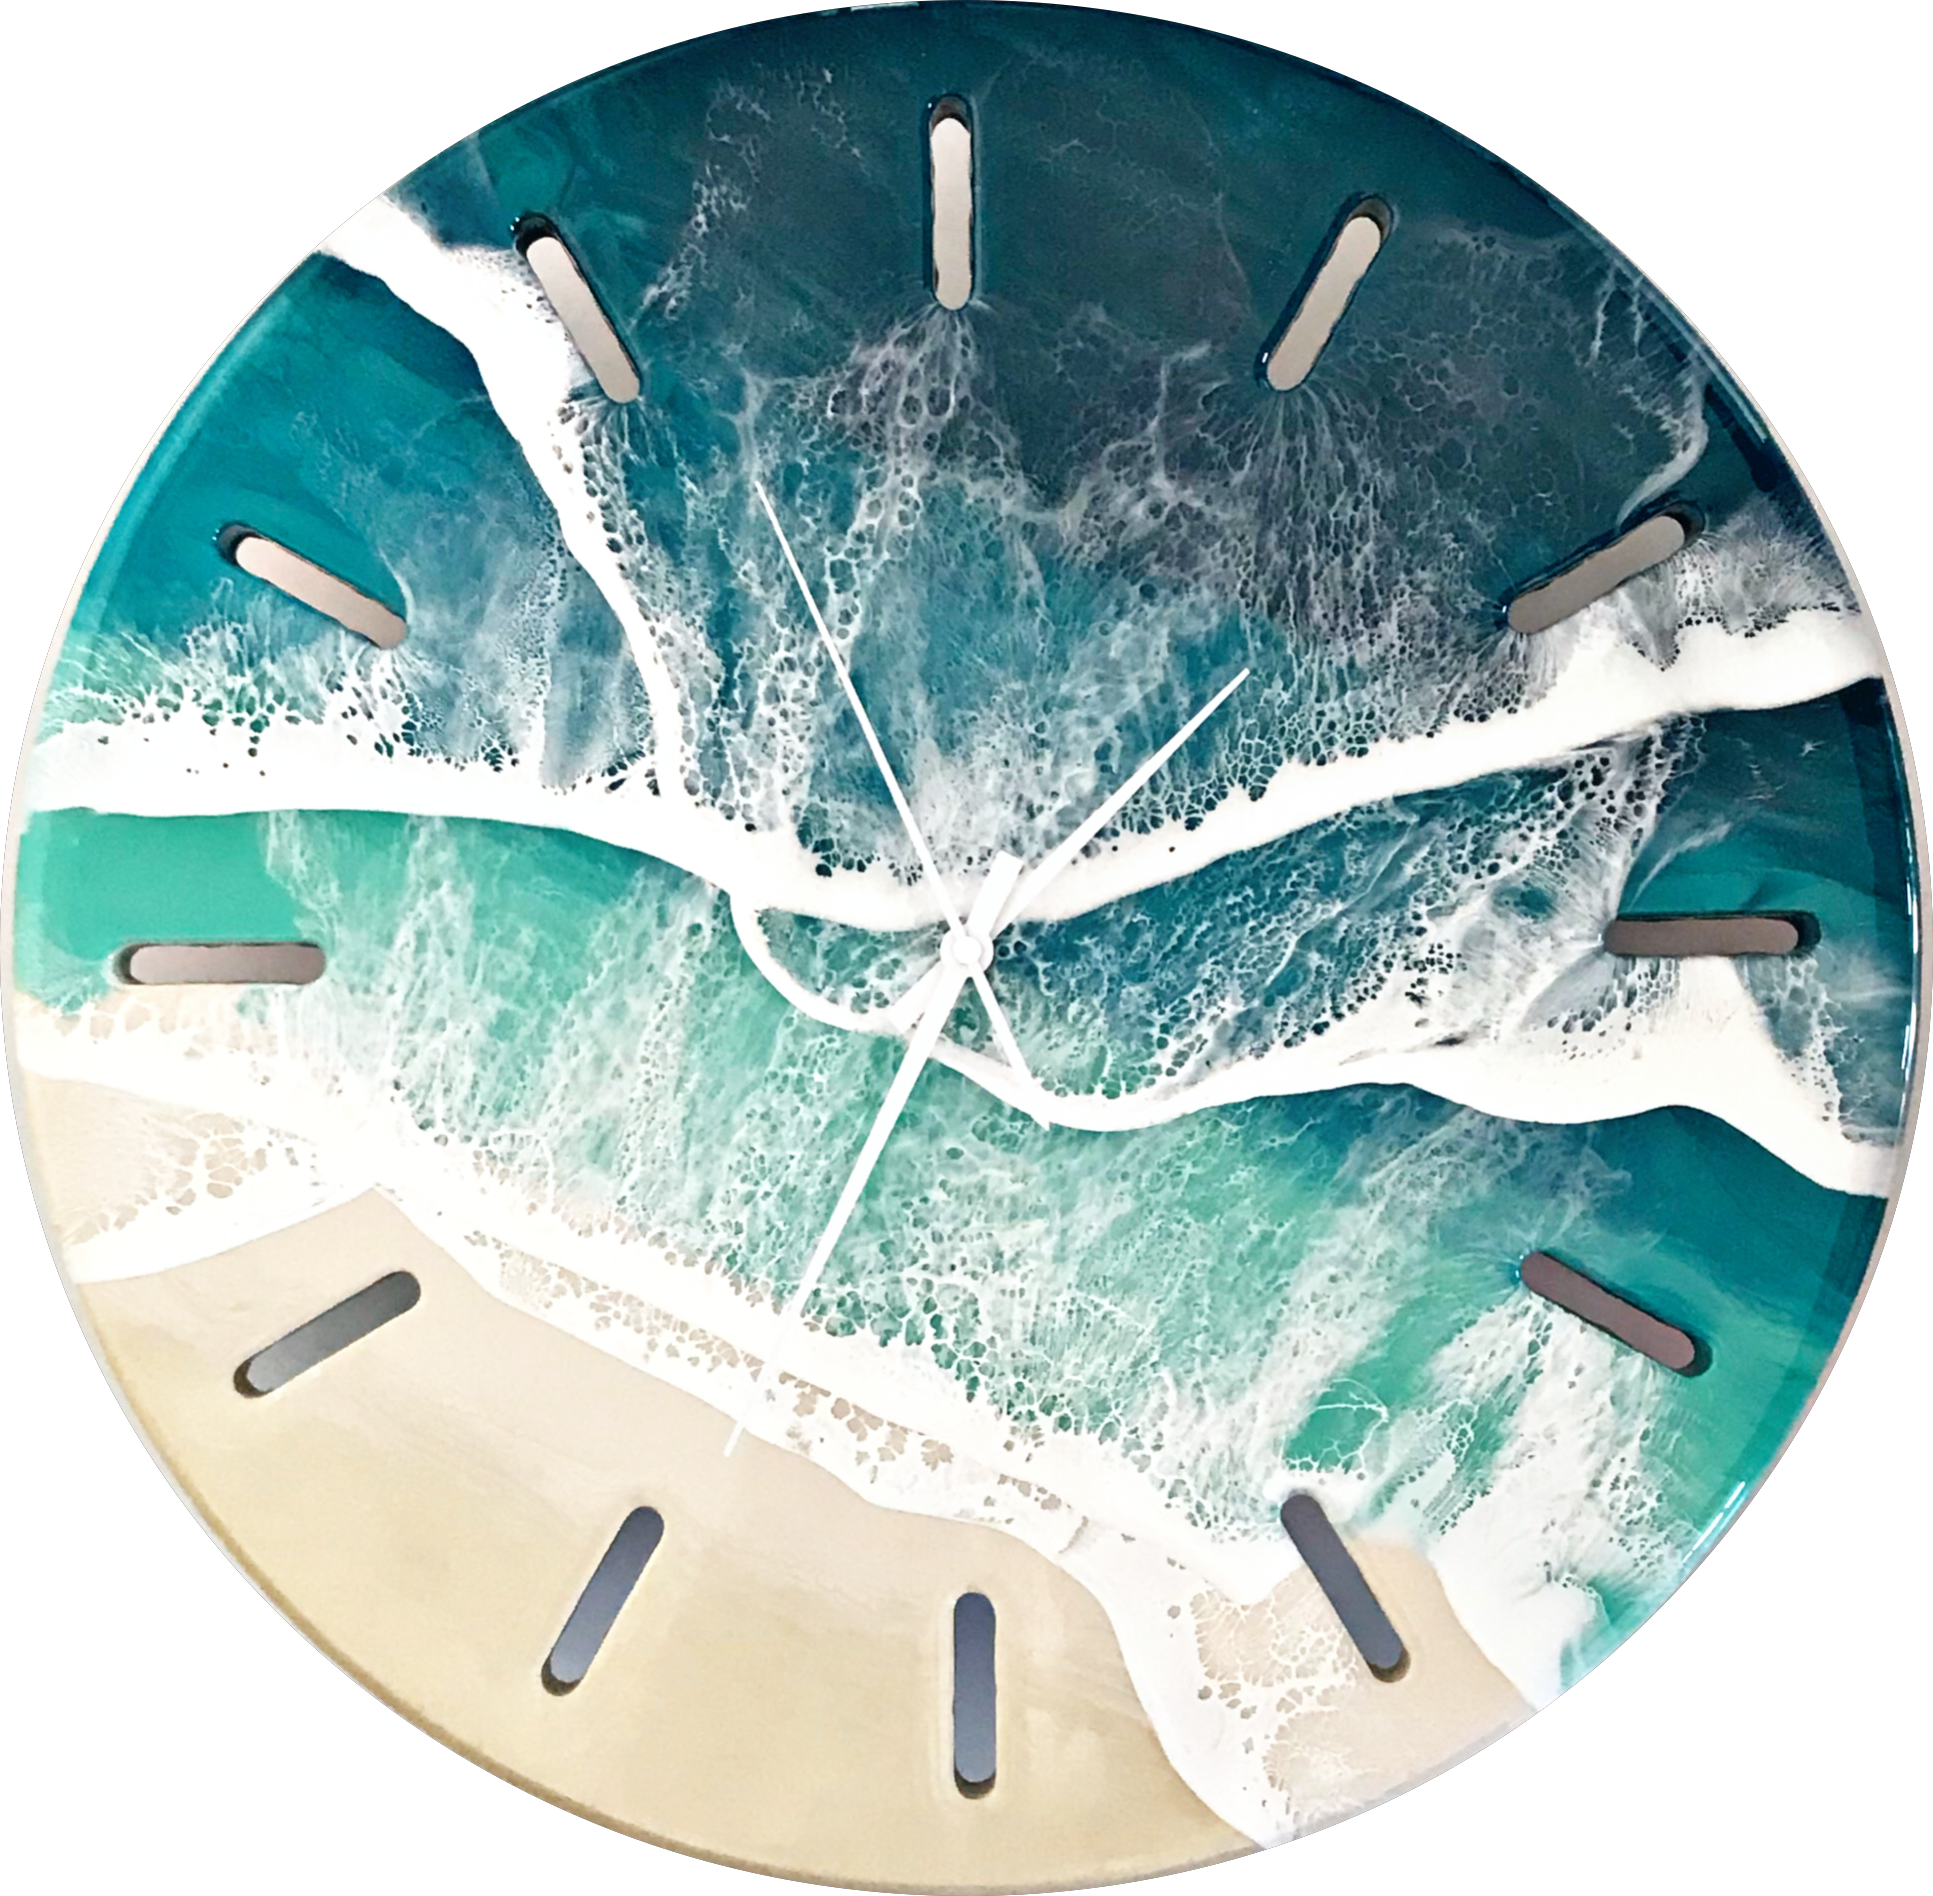 Large 50cm Resin Beach Wall Clock- TURQUOISE SEAS